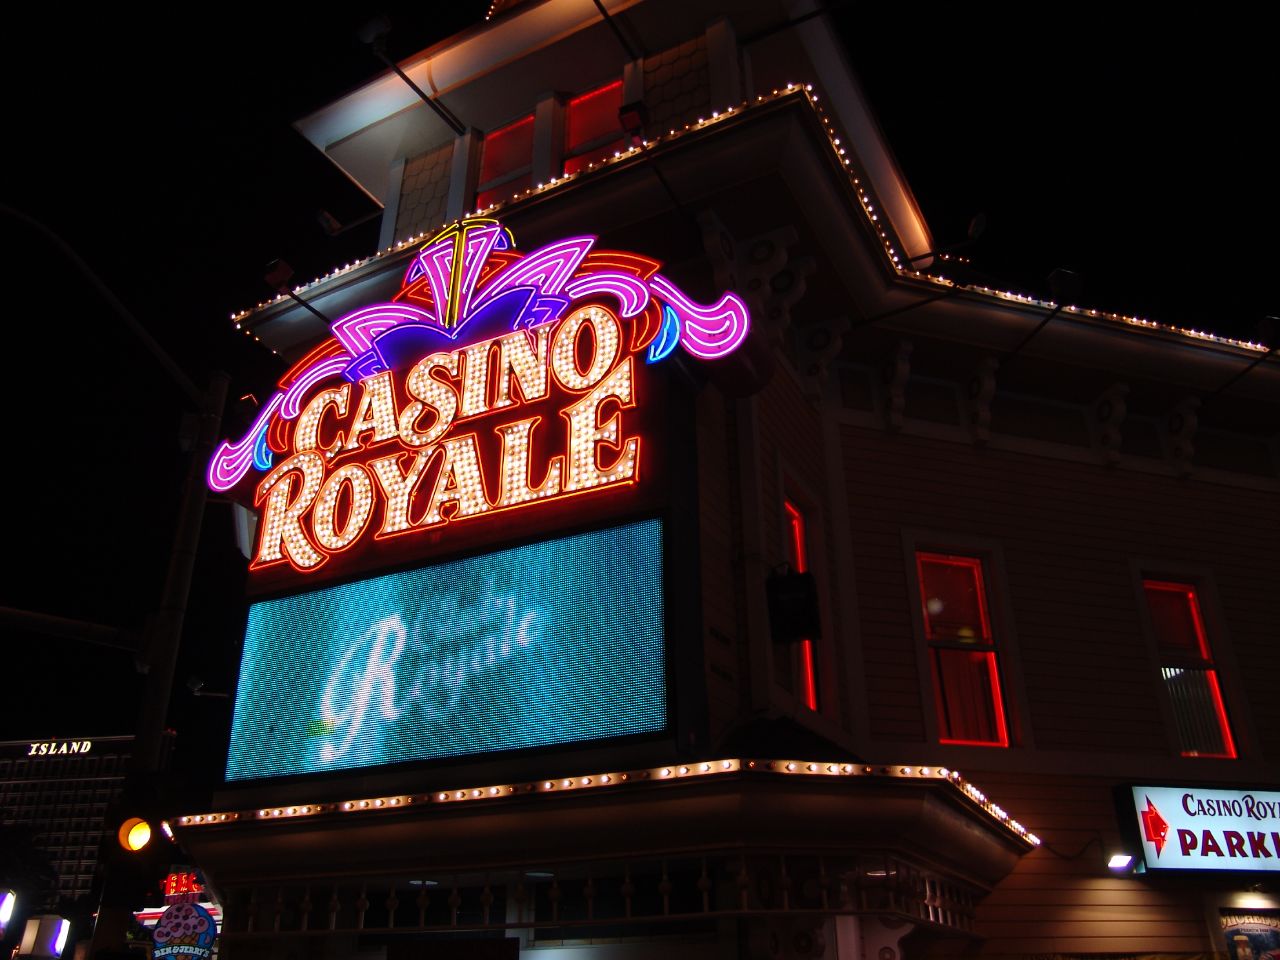 Auto Casino Royal